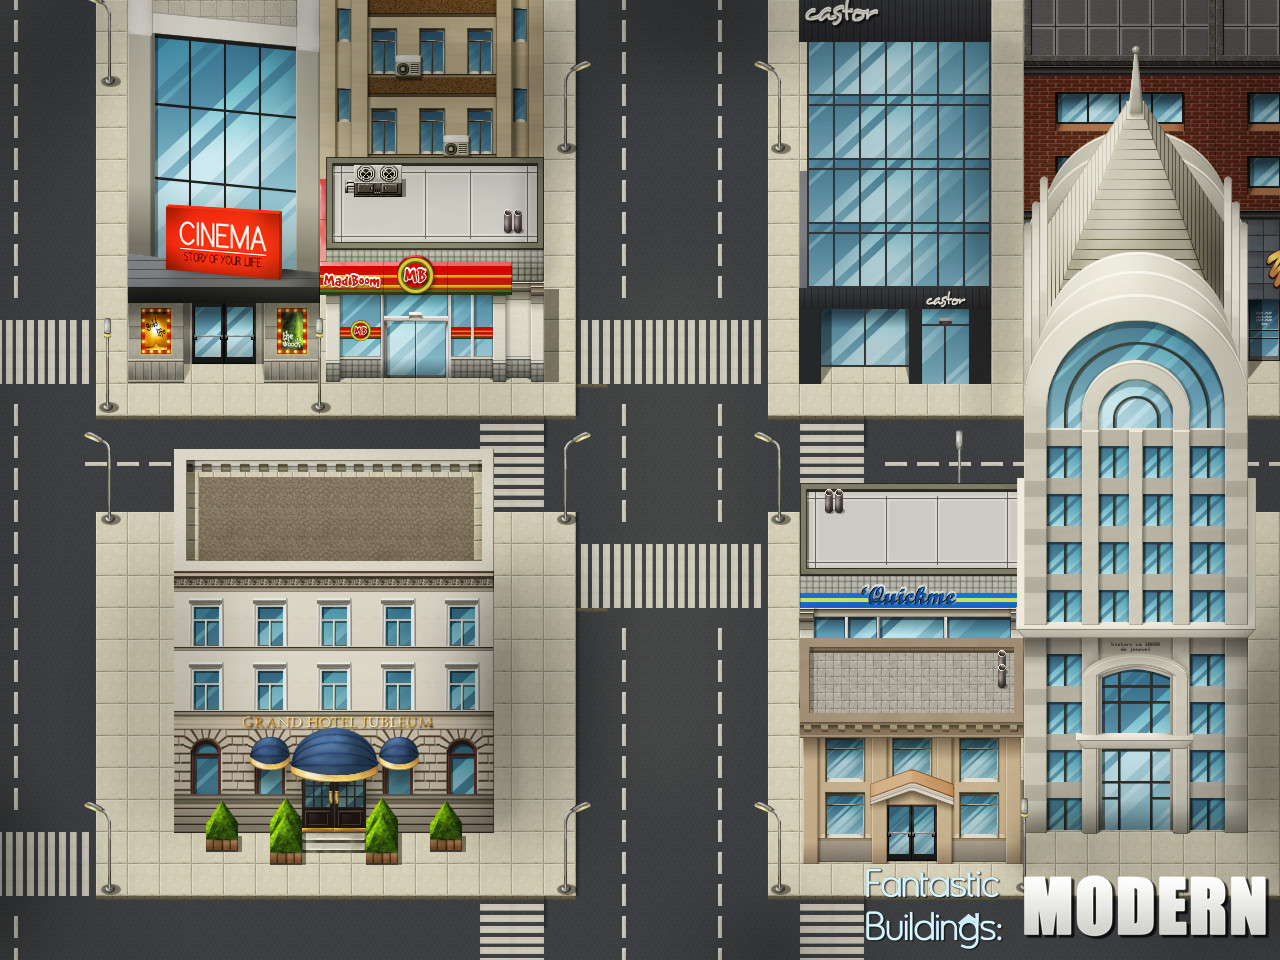 RPG Maker VX - Ace Fantastic Buildings: Modern DLC EU Steam CD Key, 5.07 usd